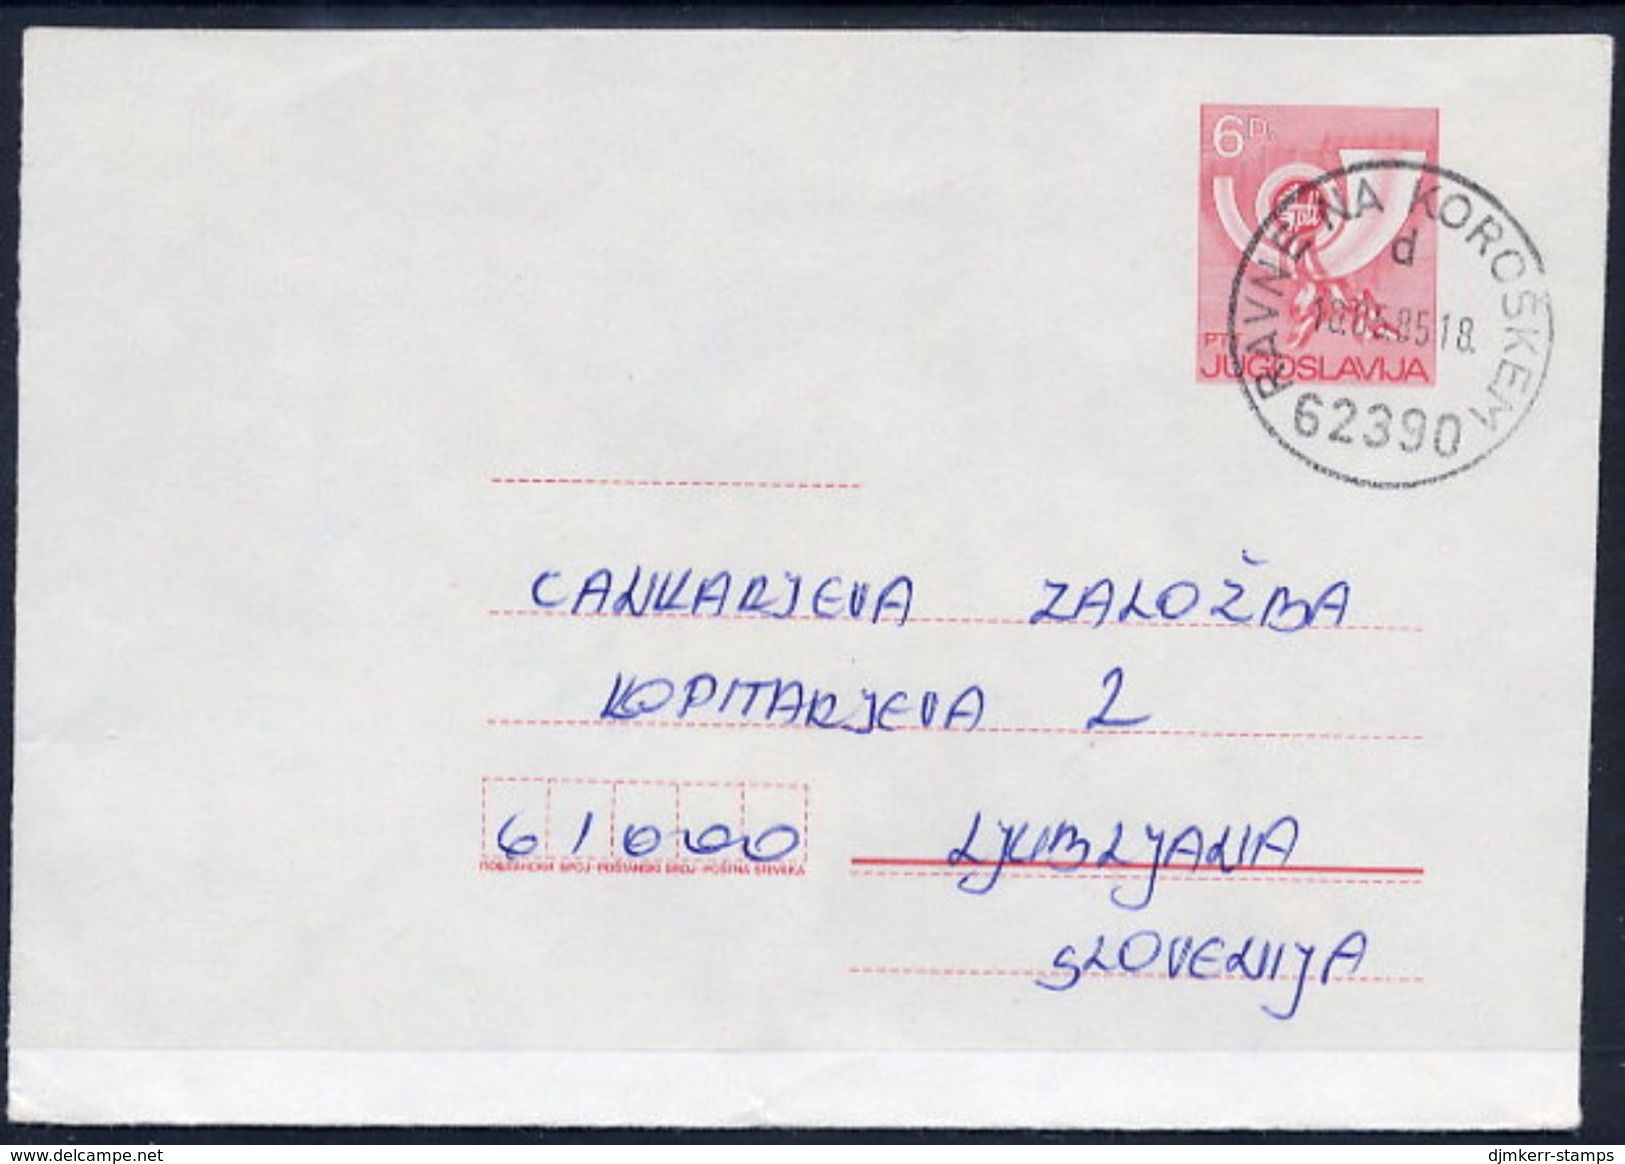 YUGOSLAVIA 1984 Posthorn 6 D.stationery Envelope Used Without Additional Franking.  Michel U73 - Postal Stationery